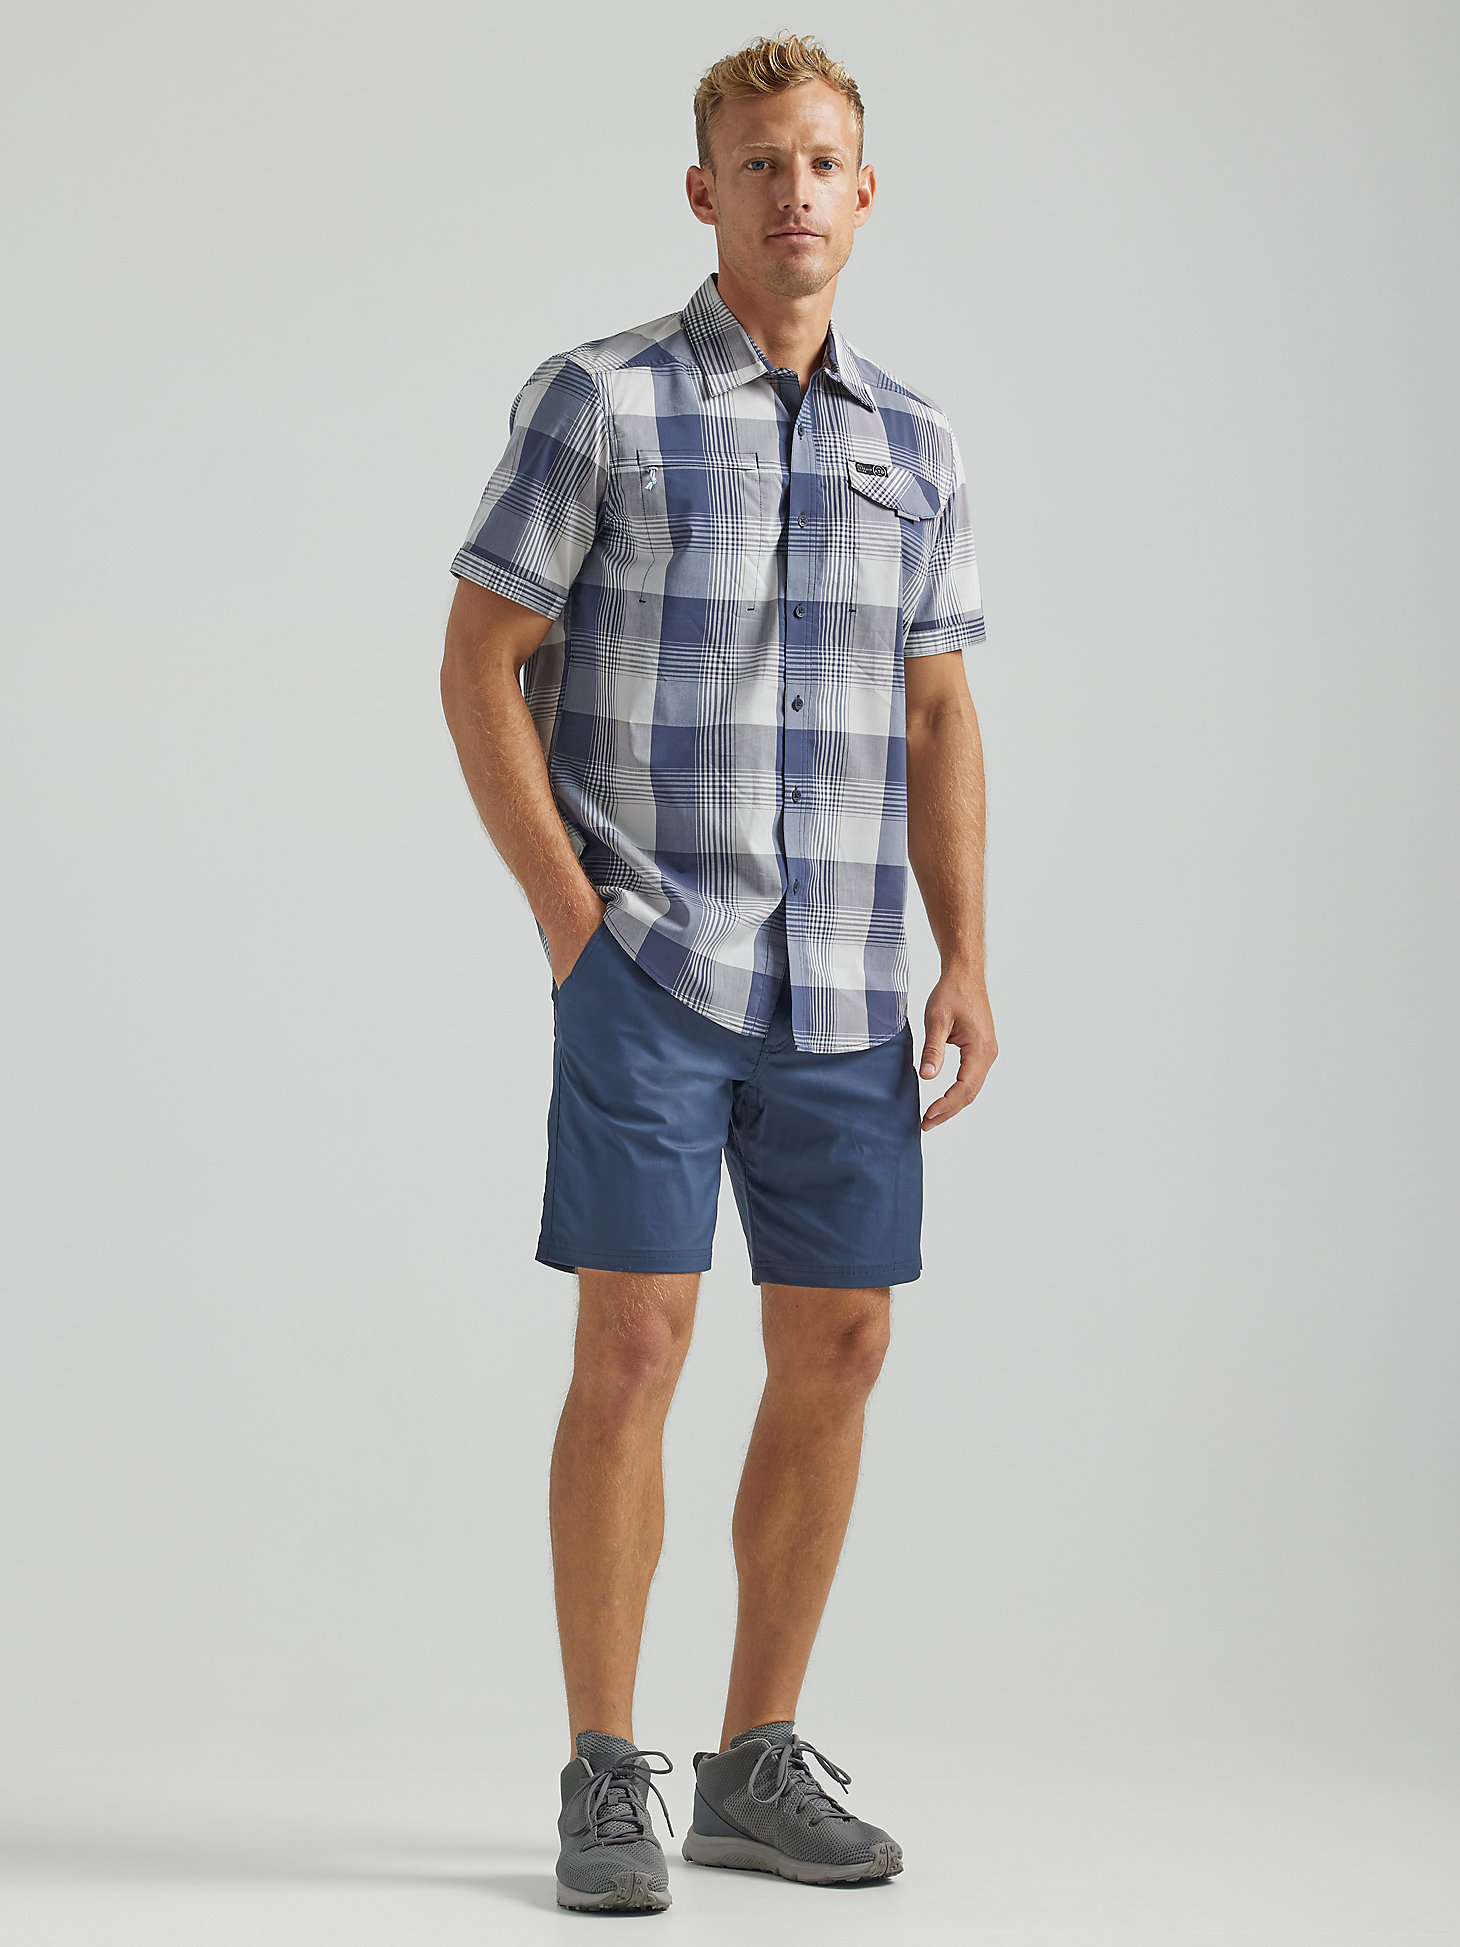 ATG By Wrangler™ Men's Asymmetrical Zip Pocket Plaid Shirt in Mist alternative view 7